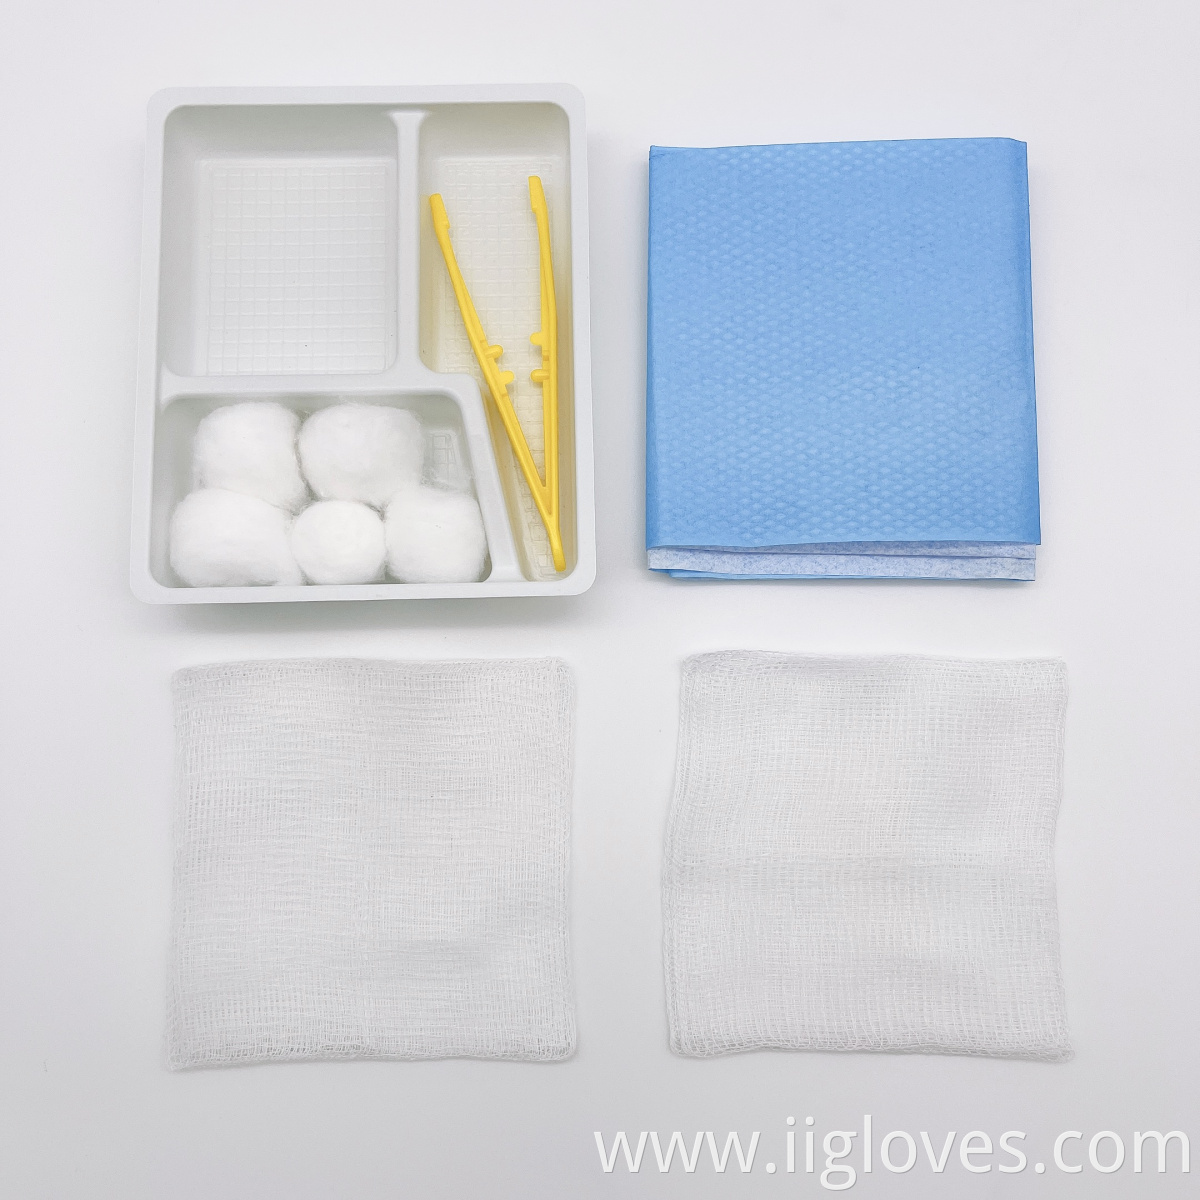 Disposable Medical Sterilize 8ply 7.5cm*7.5cm Non Woven Gauze Sponges for Hospital Use